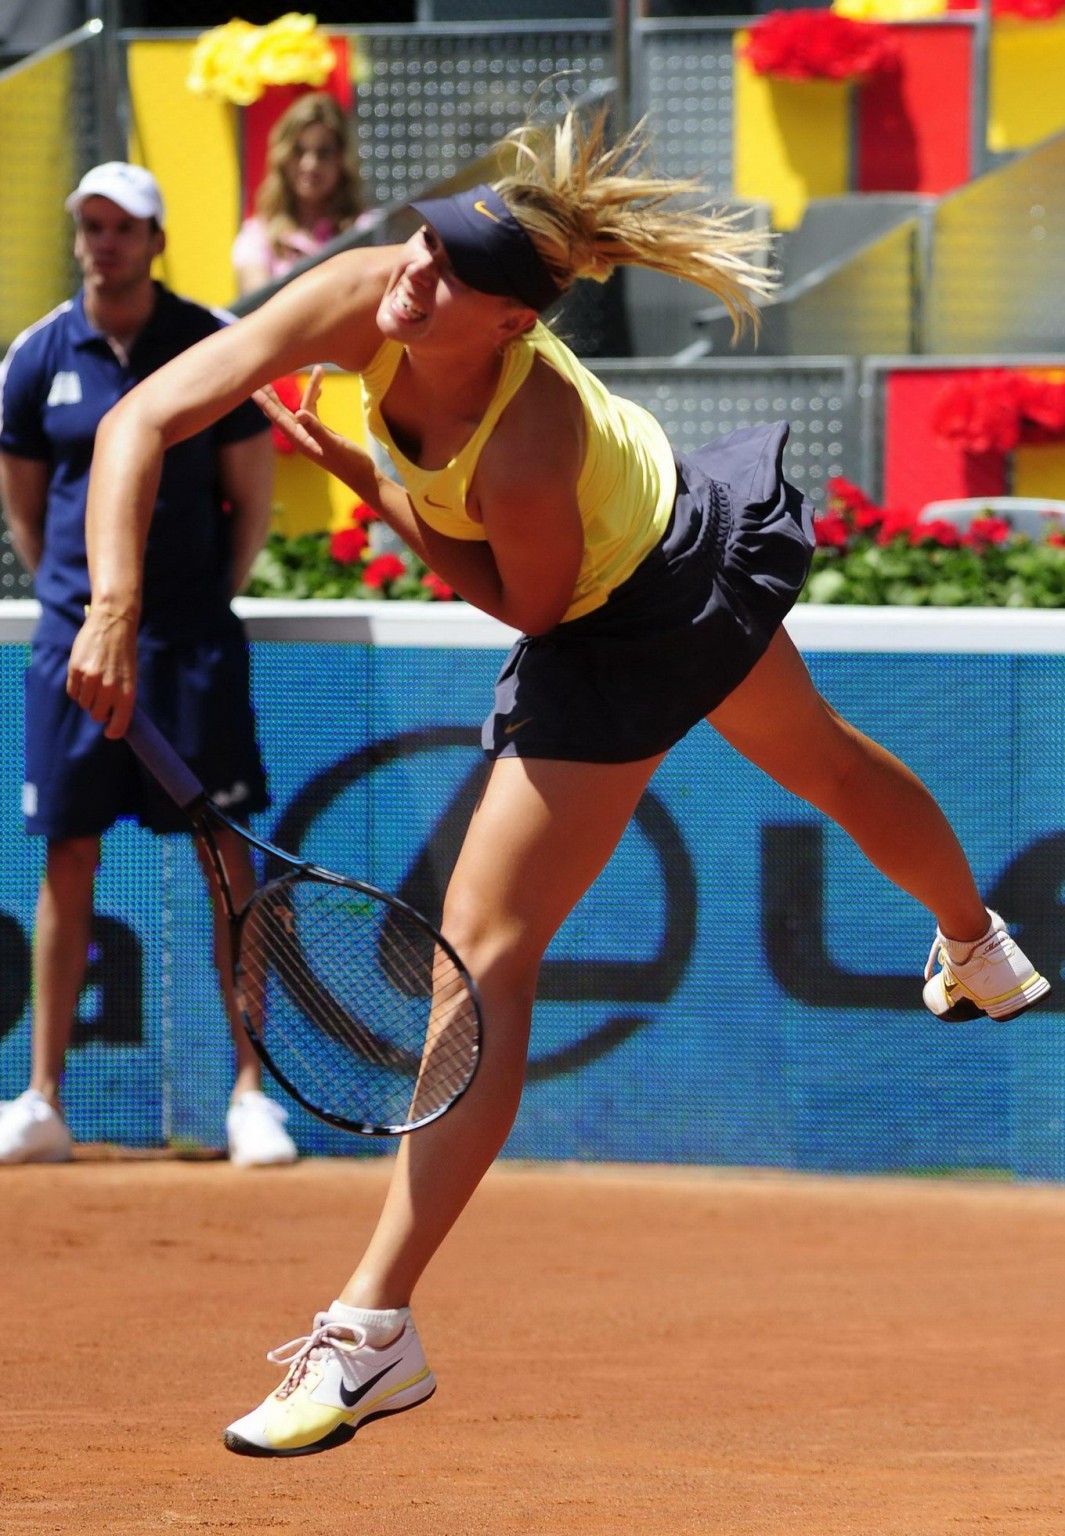 Maria Sharapova upskirt at the 'Madrid Masters' tournament #75305216